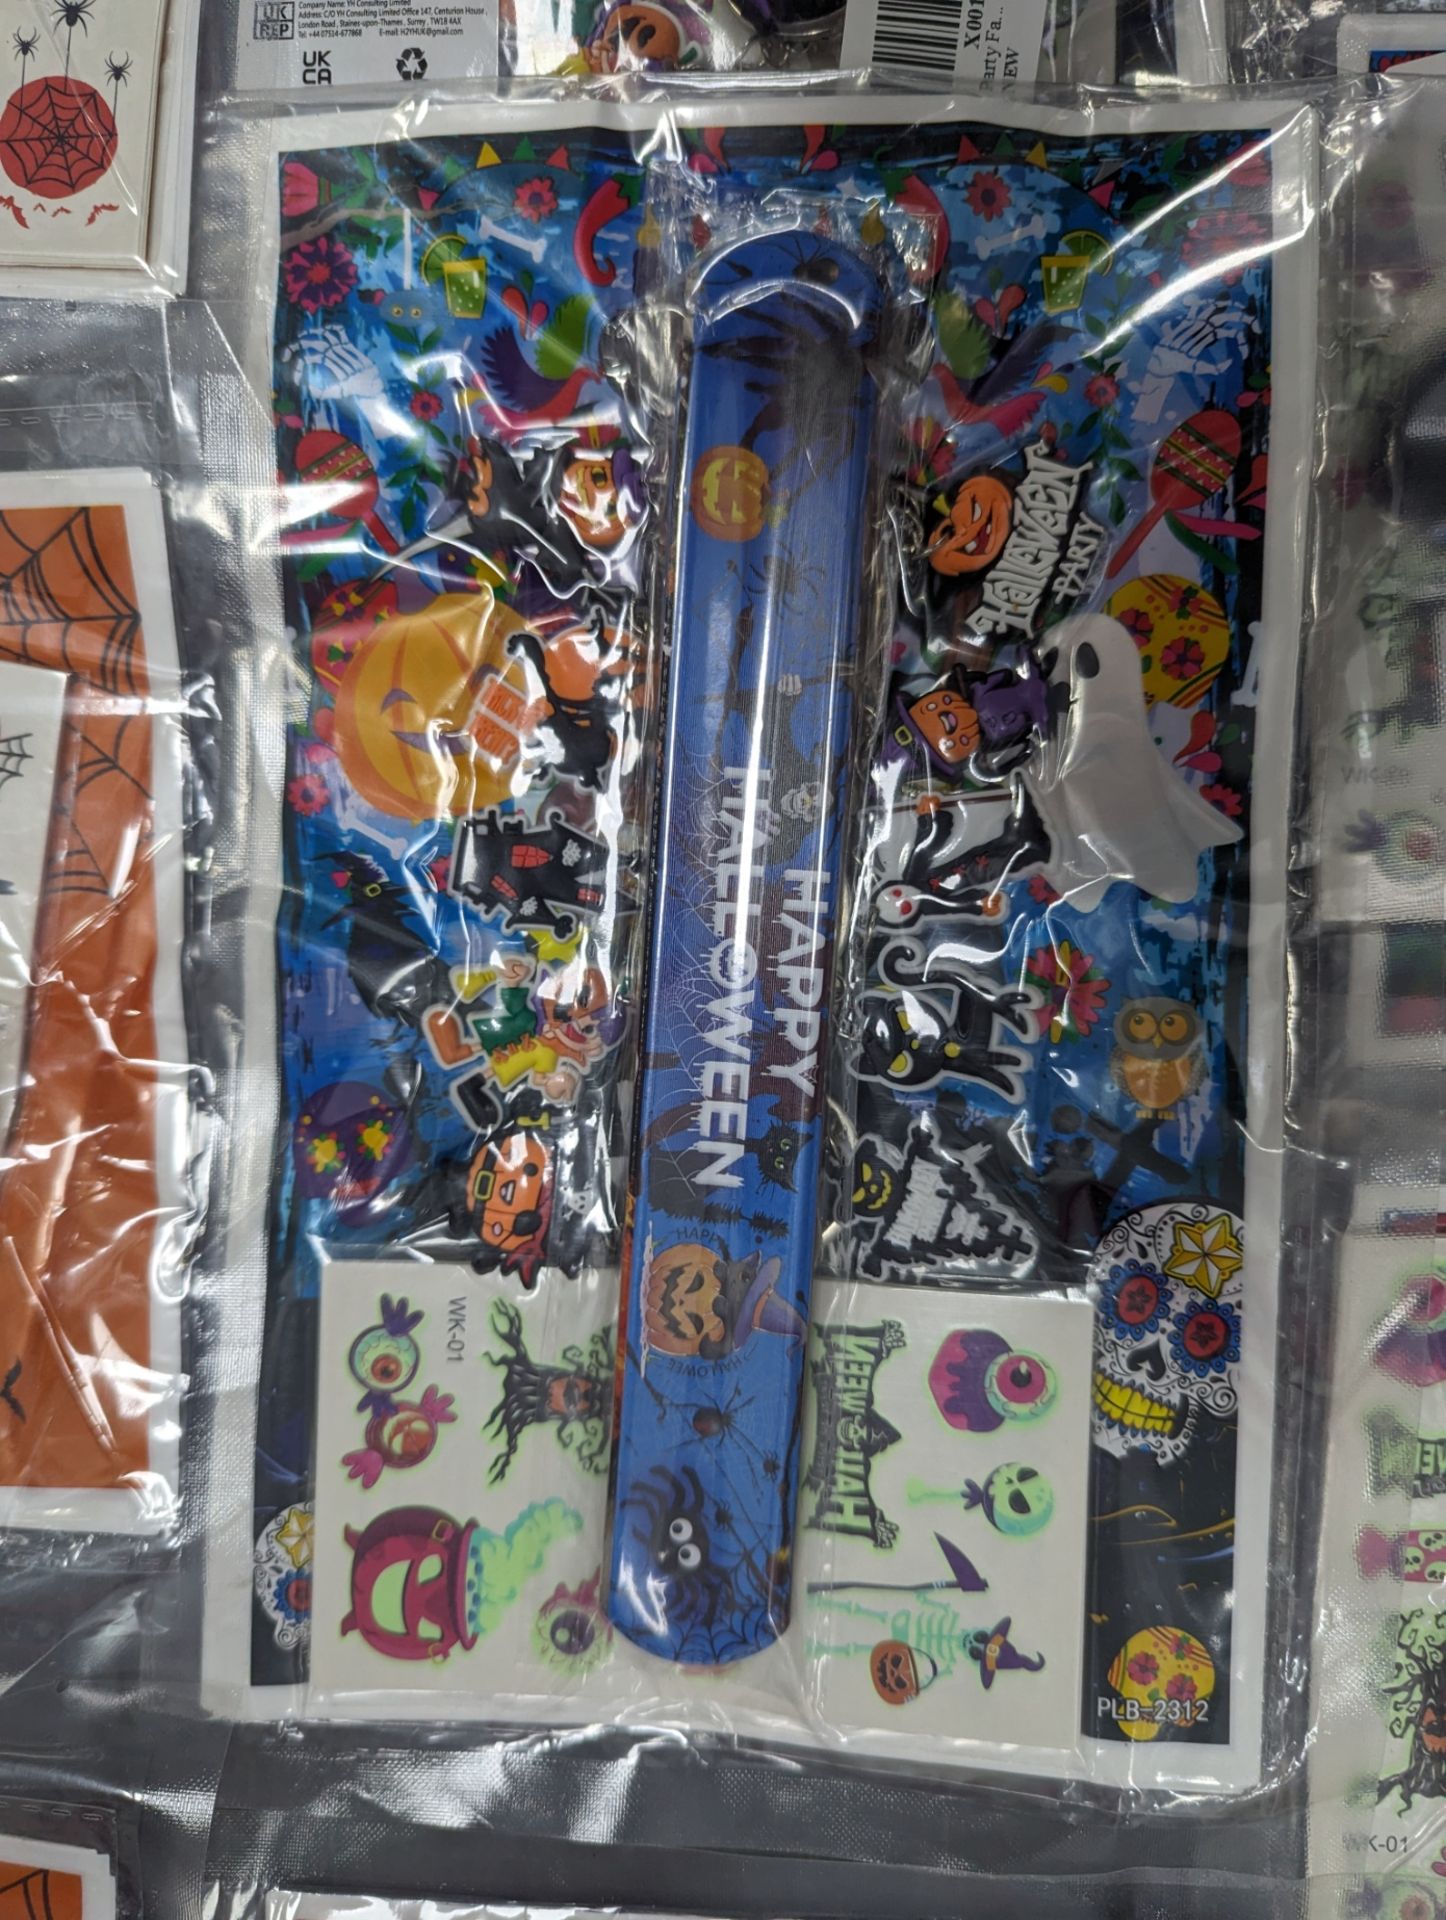 10x Slap Band Bracelet Kid Party Bags Favour Stocking Filler Loot Gift Toys Set Lot32 - Image 4 of 4